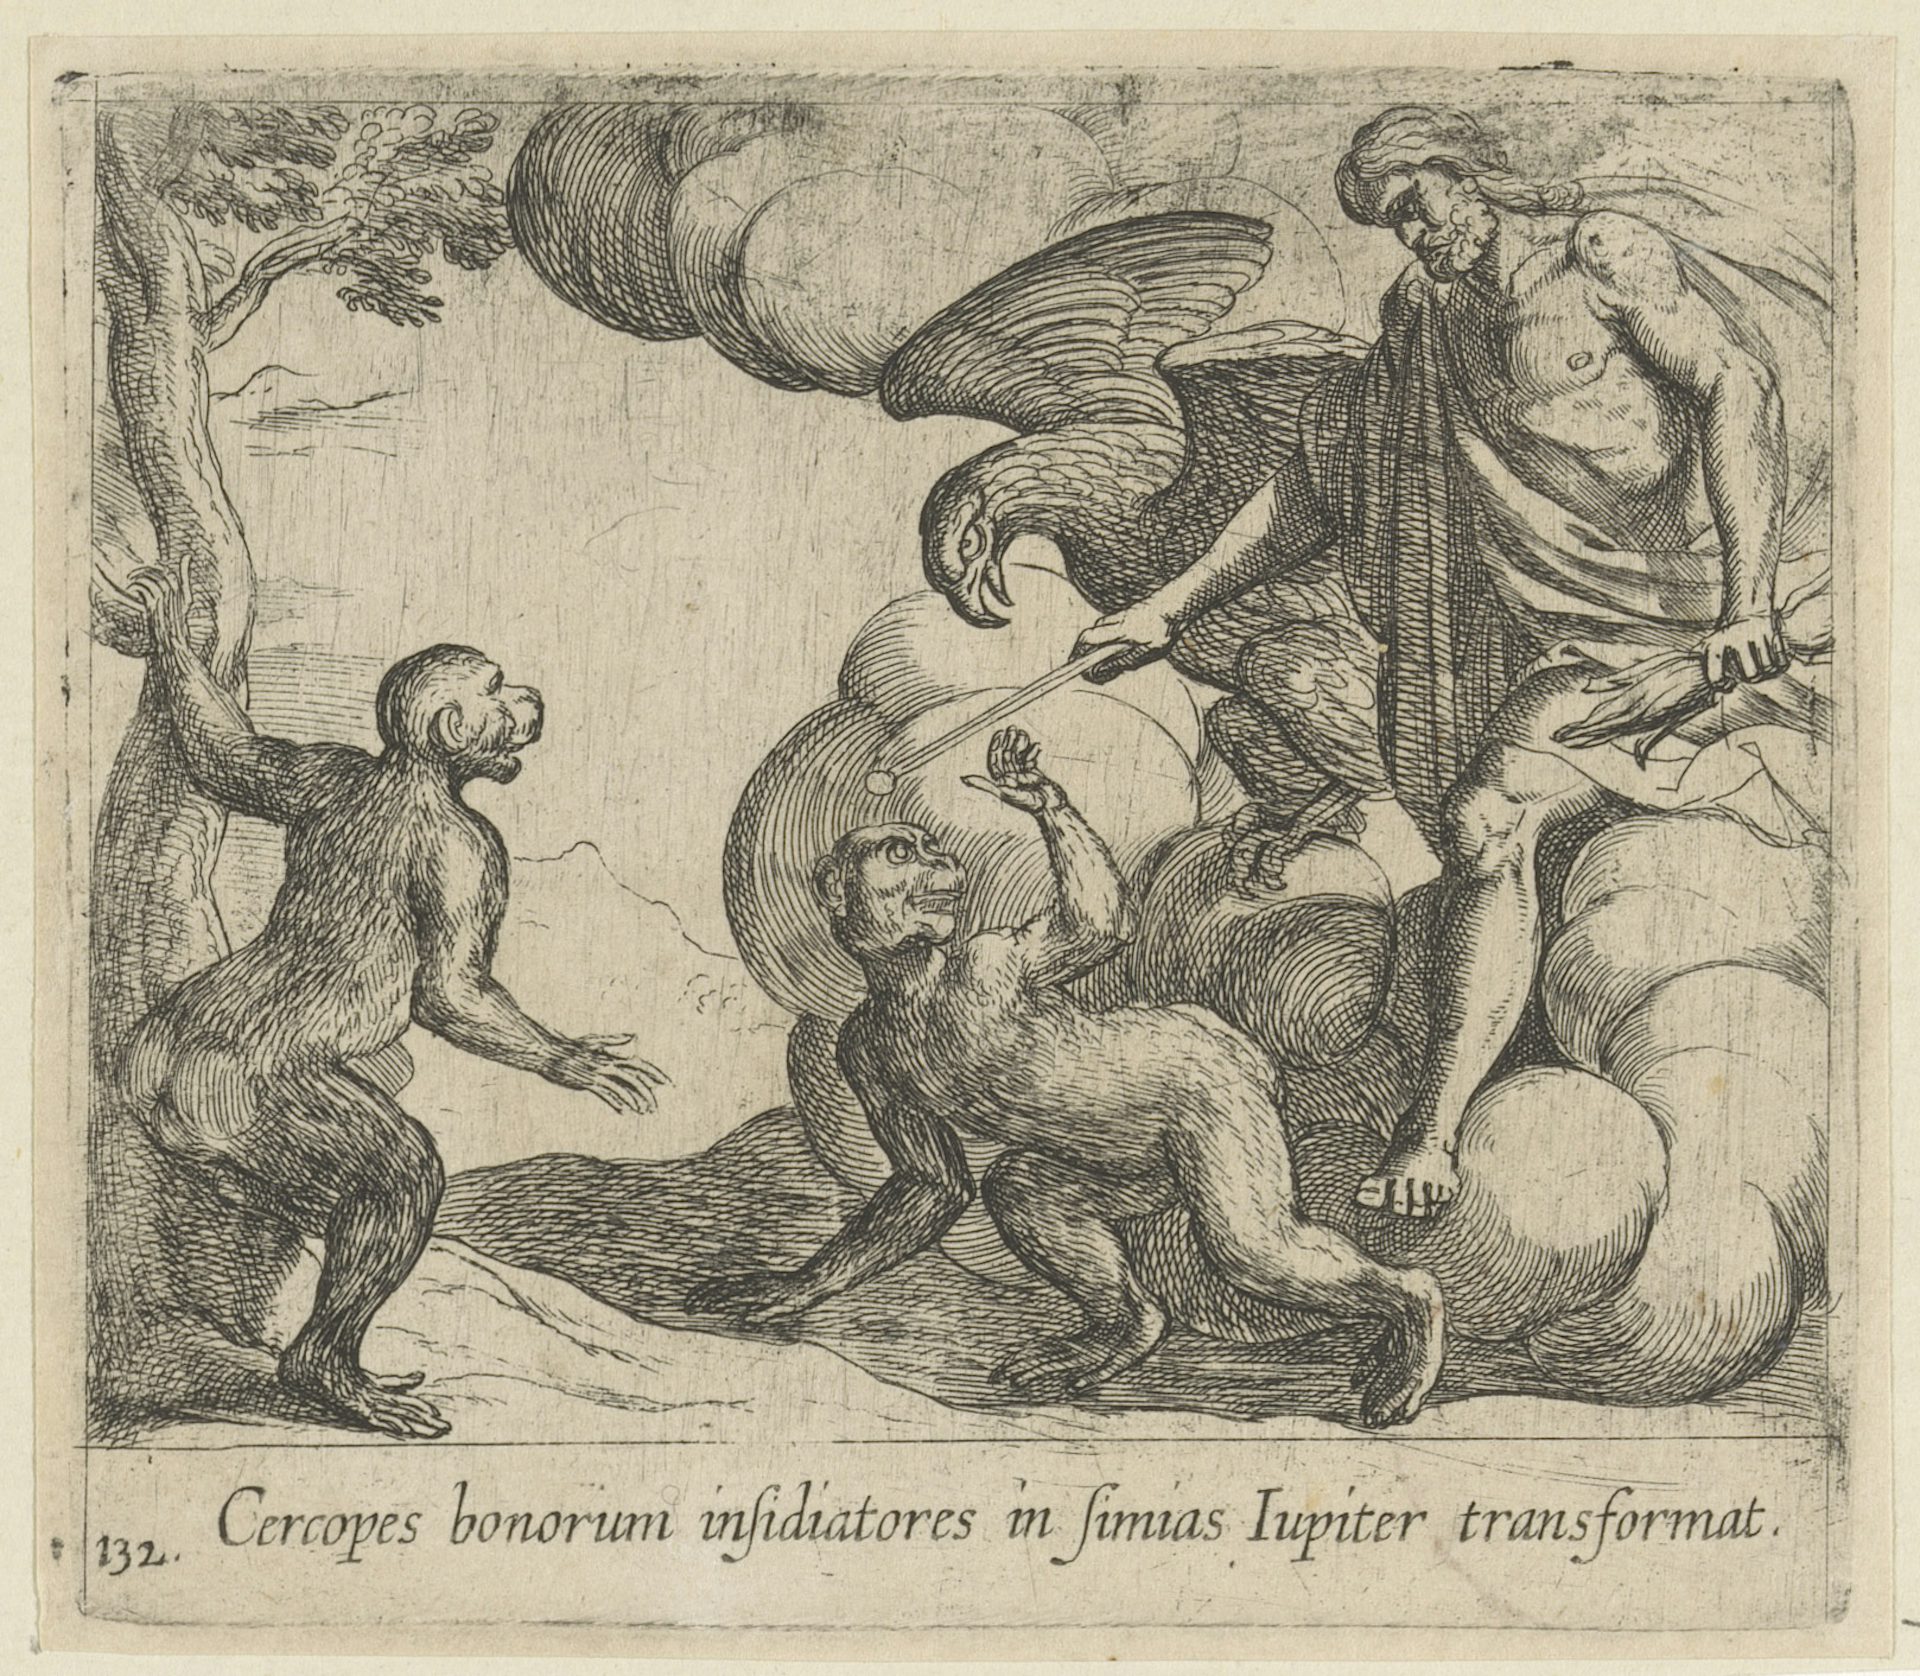 Jupiter Transforming the Cercopes in Monkeys by Antonio Tempesta